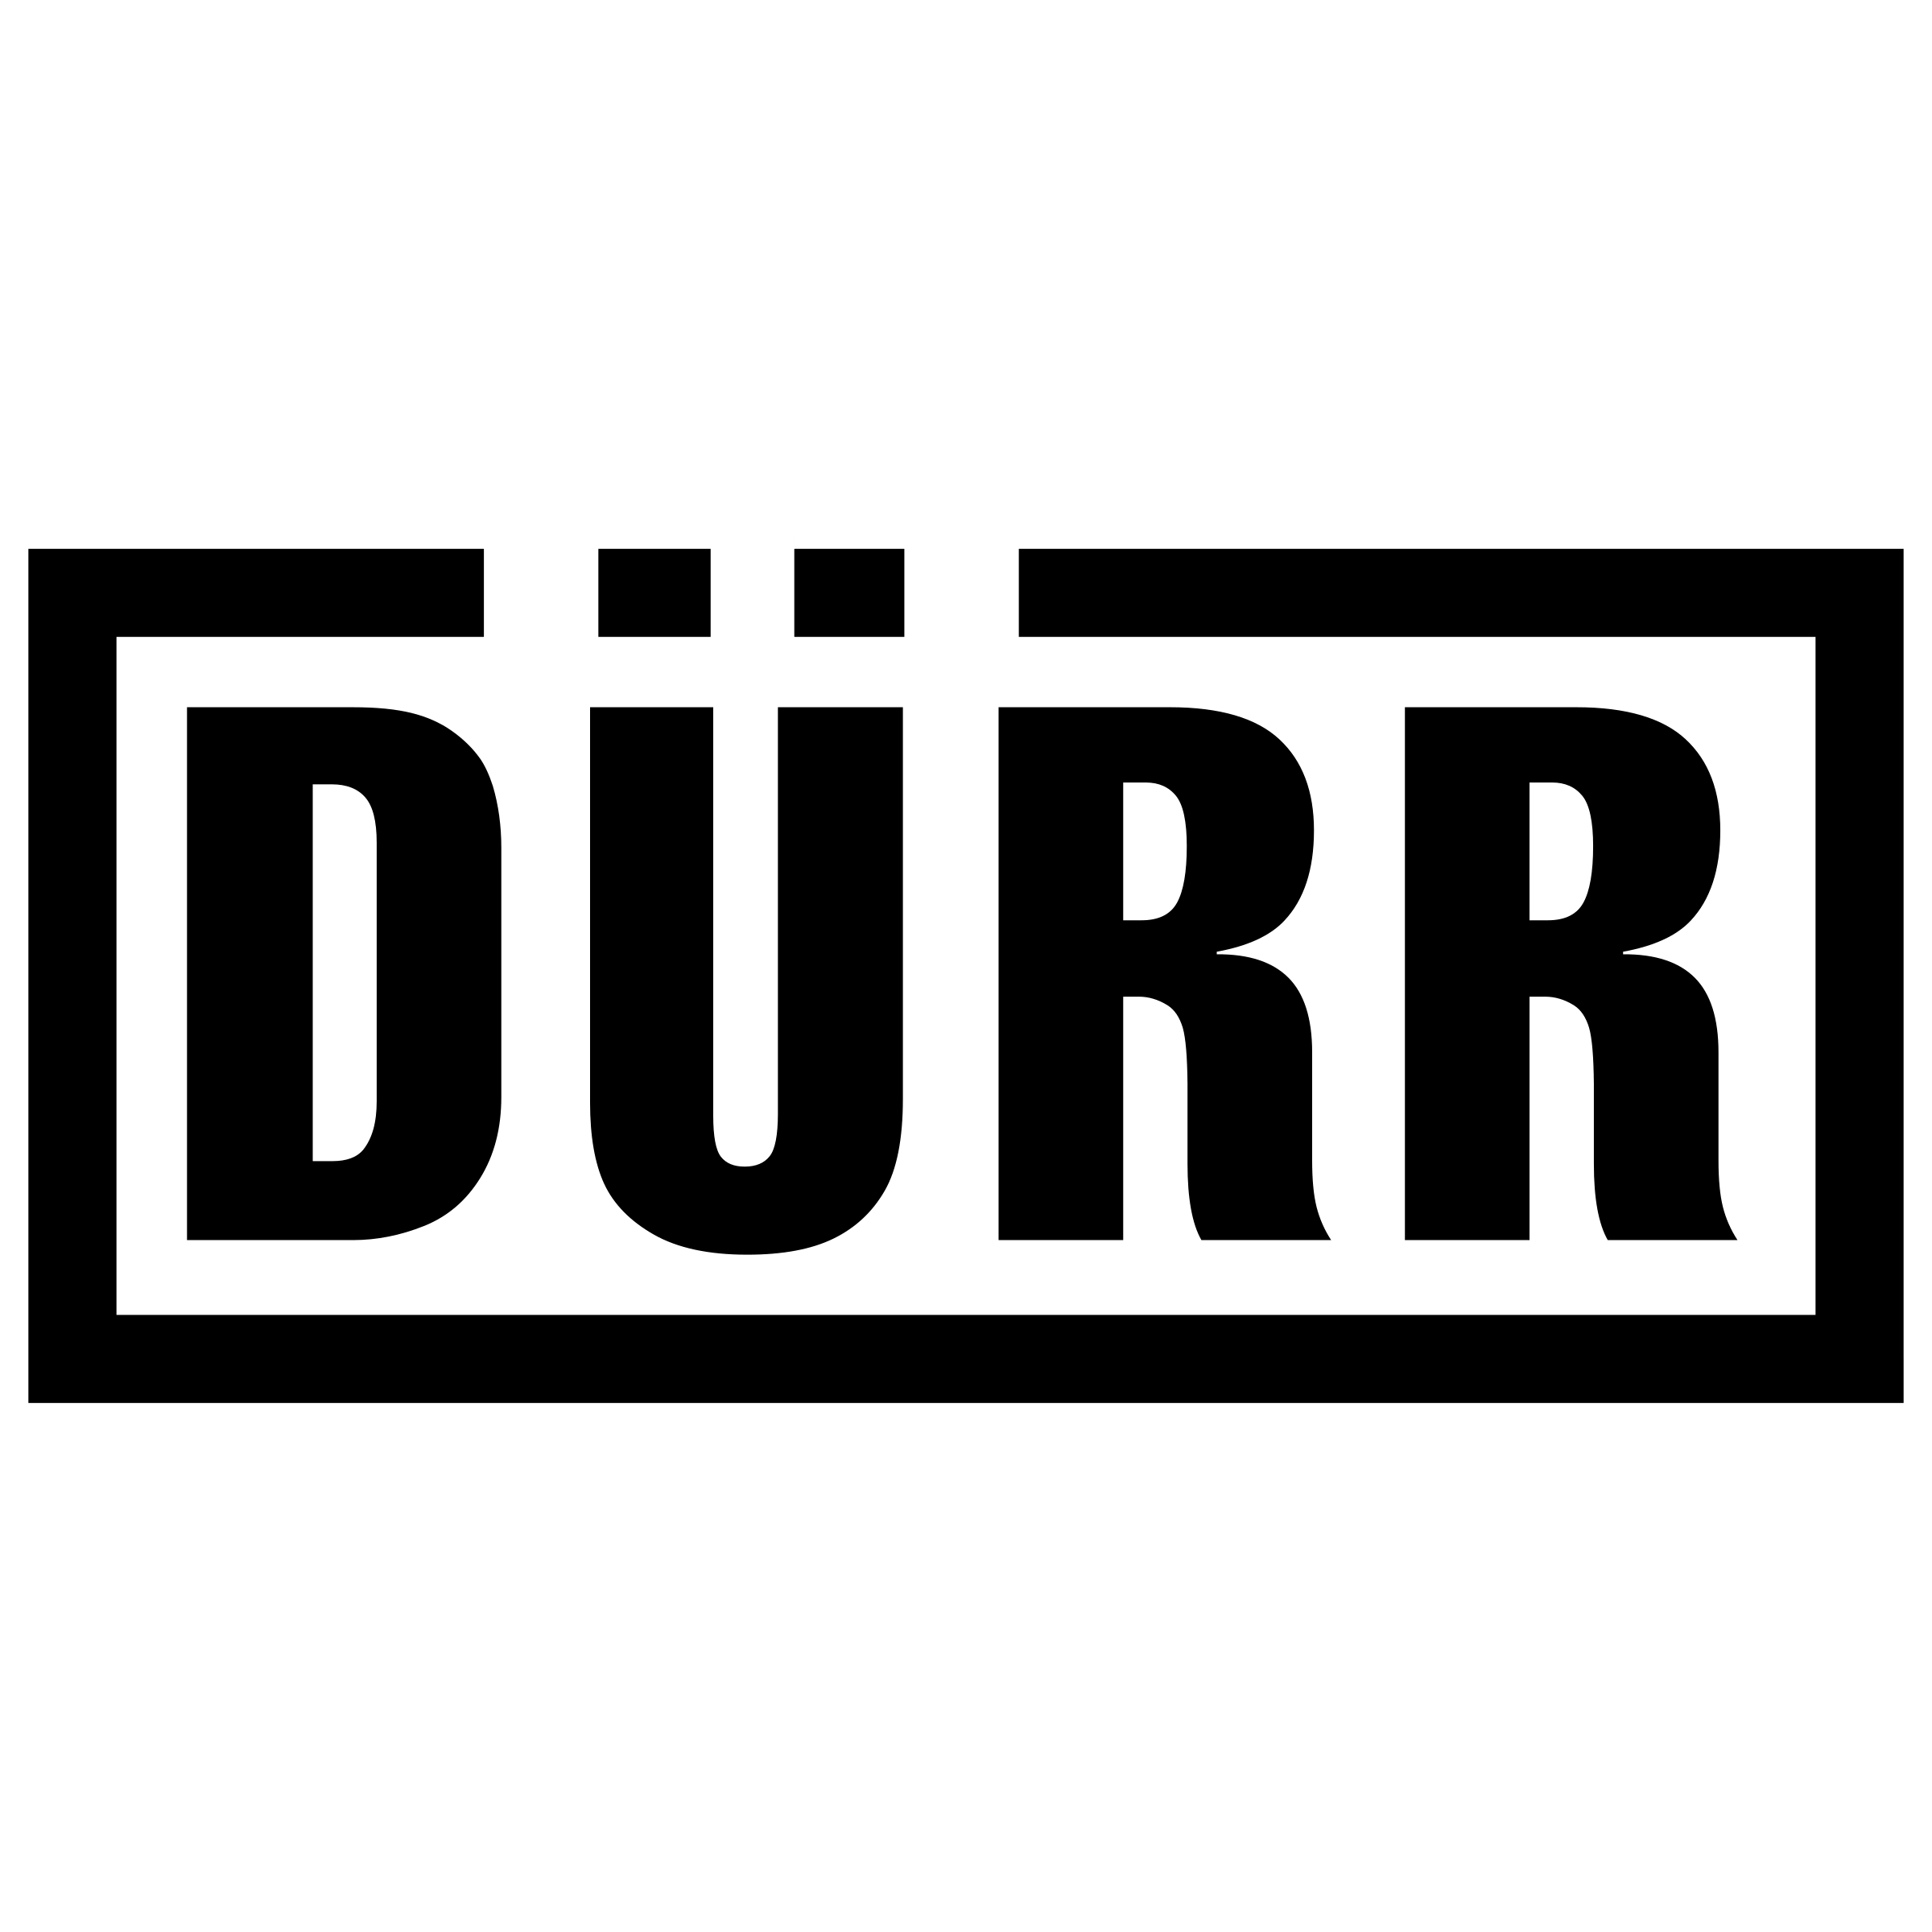 Durr Logo - DURR Logo PNG Transparent & SVG Vector - Freebie Supply